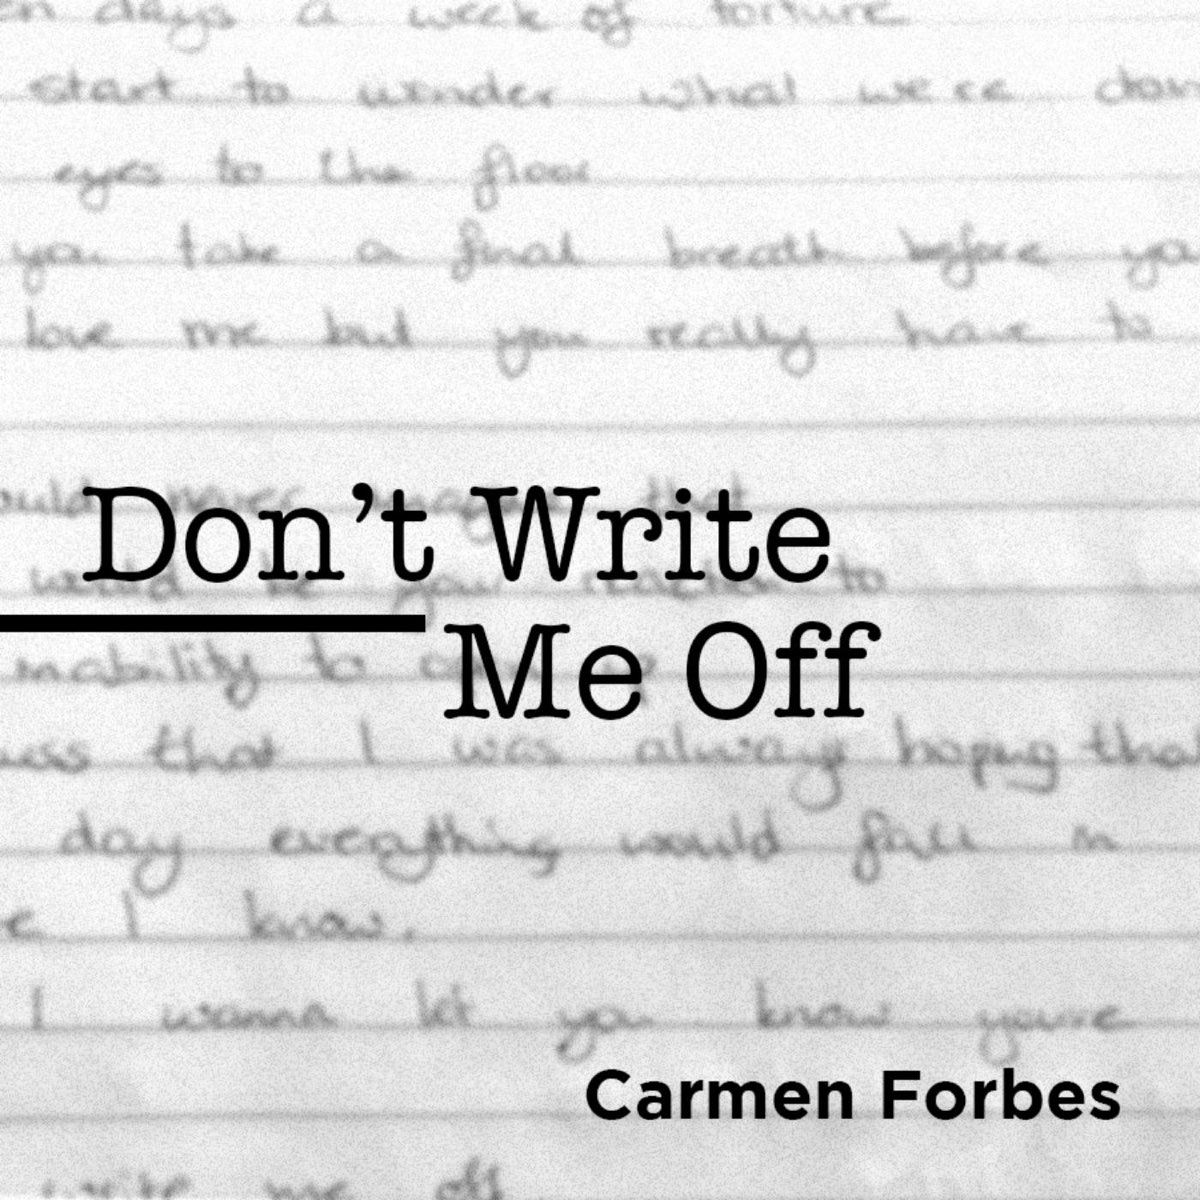 Carmen Forbes. Write me off